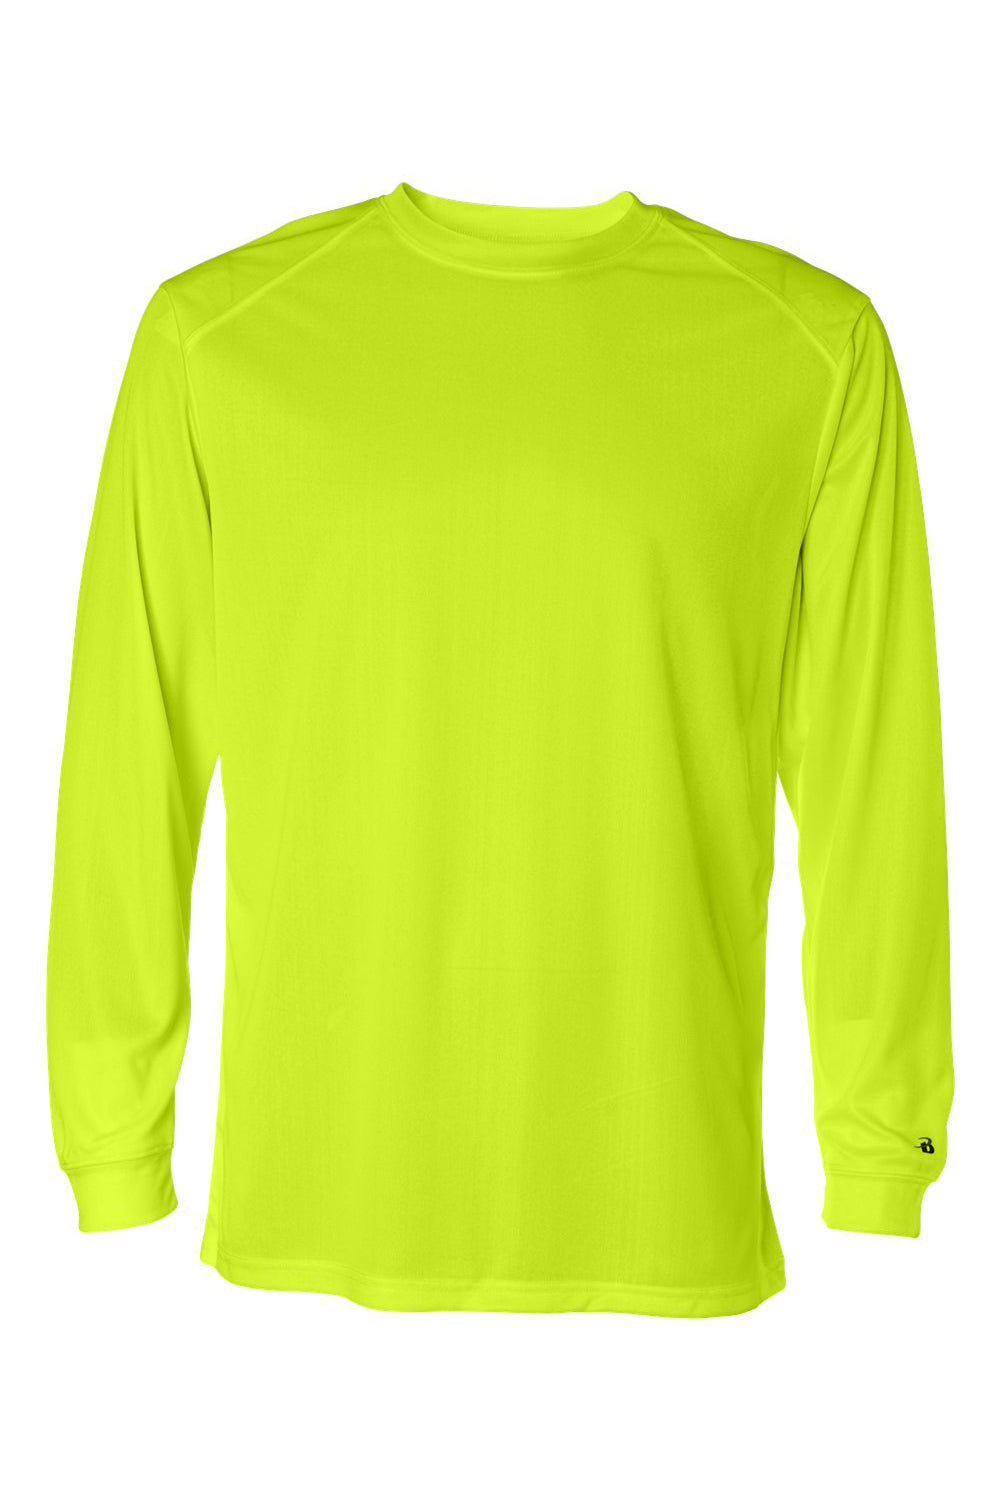 Badger 4104 Mens B-Core Moisture Wicking Long Sleeve Crewneck T-Shirt Safety Yellow Flat Back